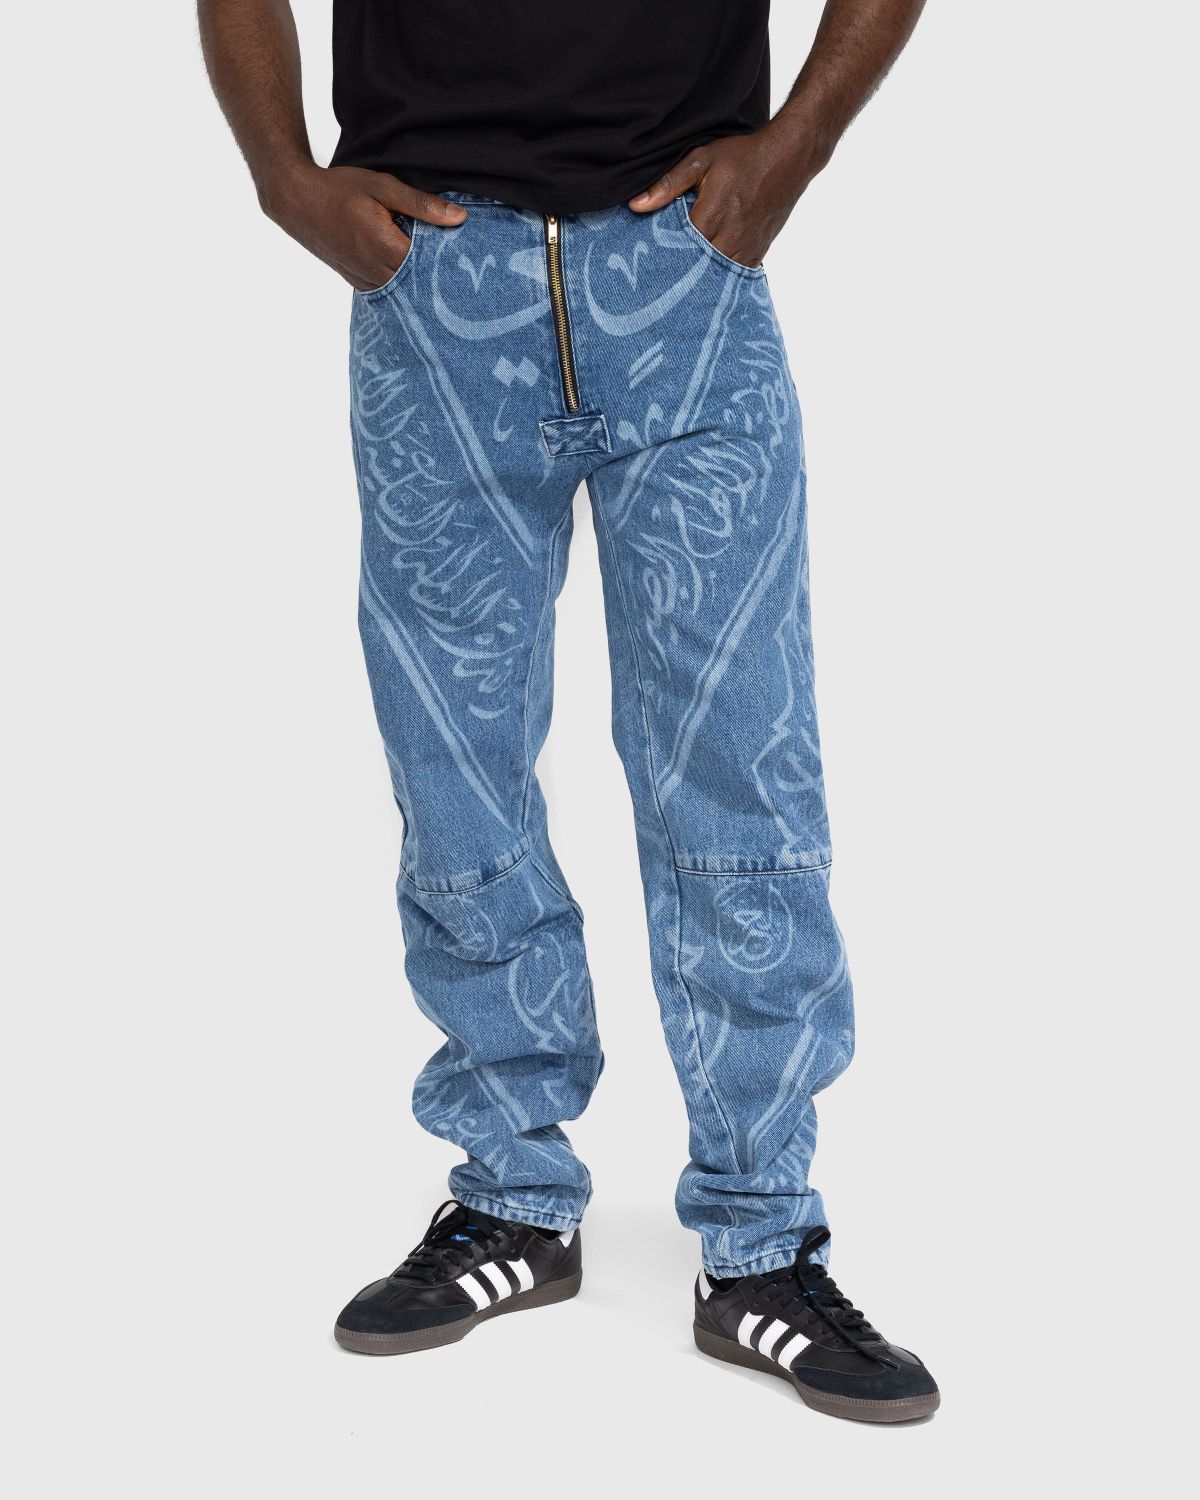 GmbH – Fatin Denim Trousers Indigo With Print - Pants - Blue - Image 2